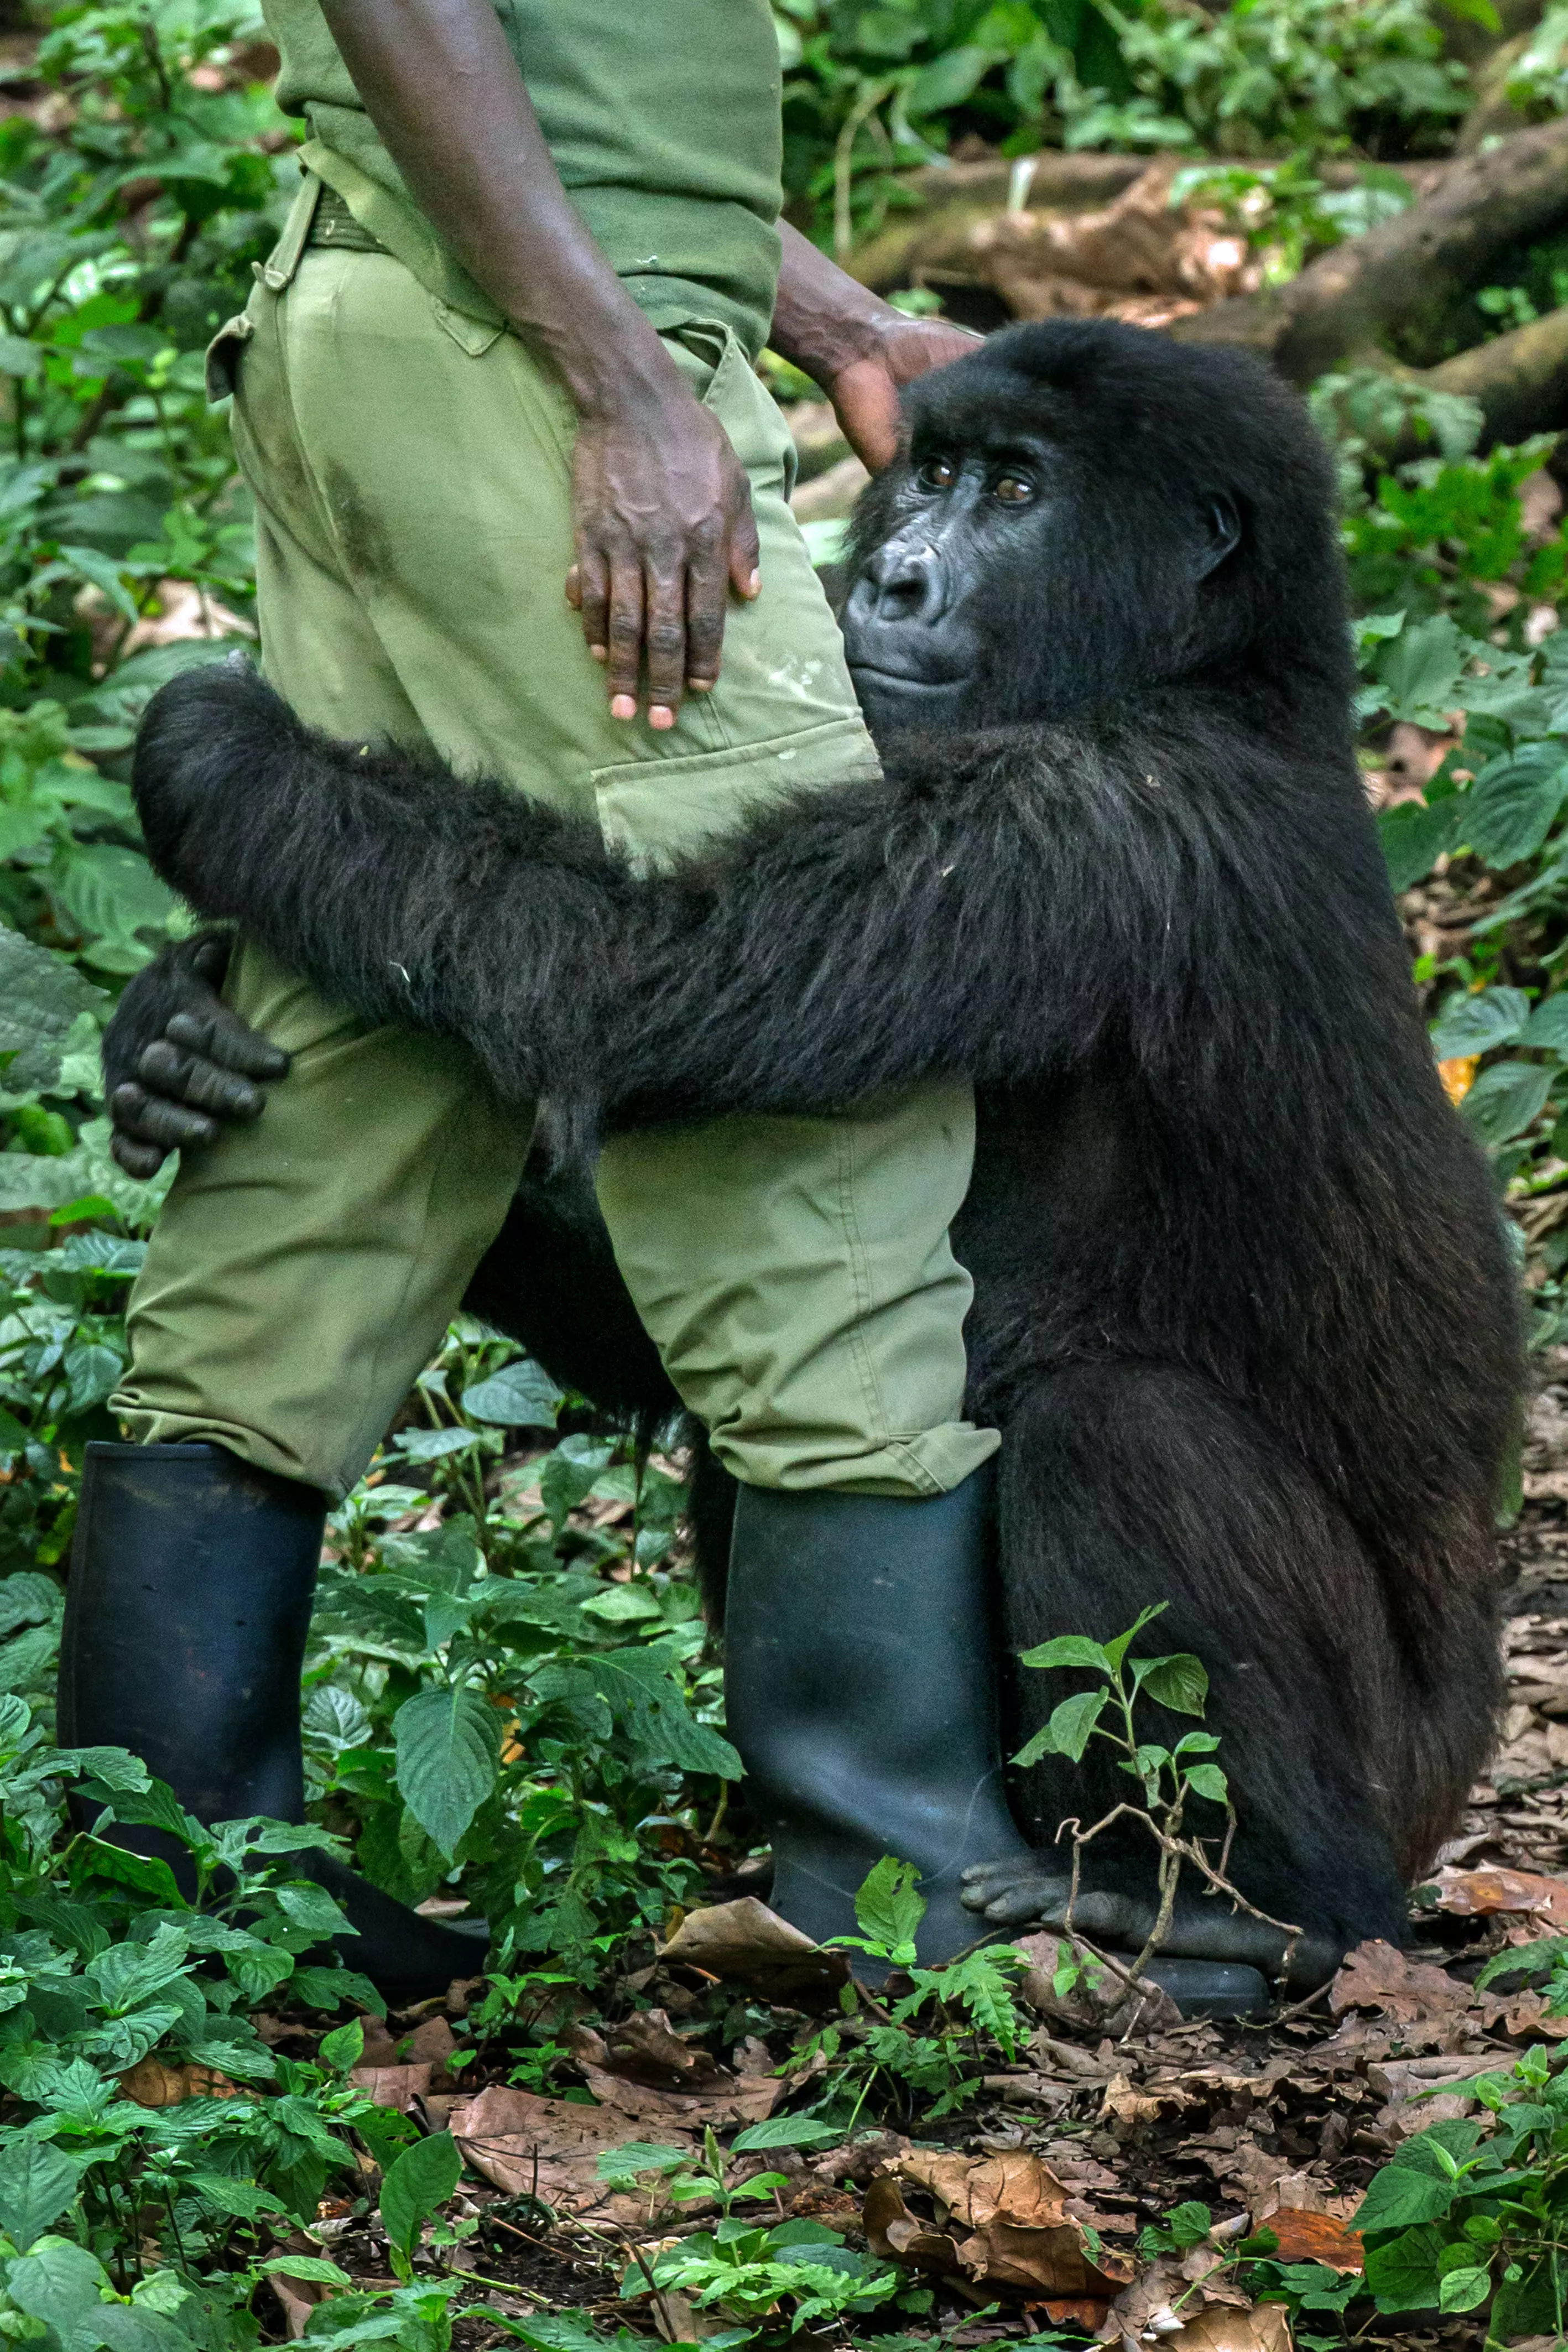 Gorilla interacting with caretaker